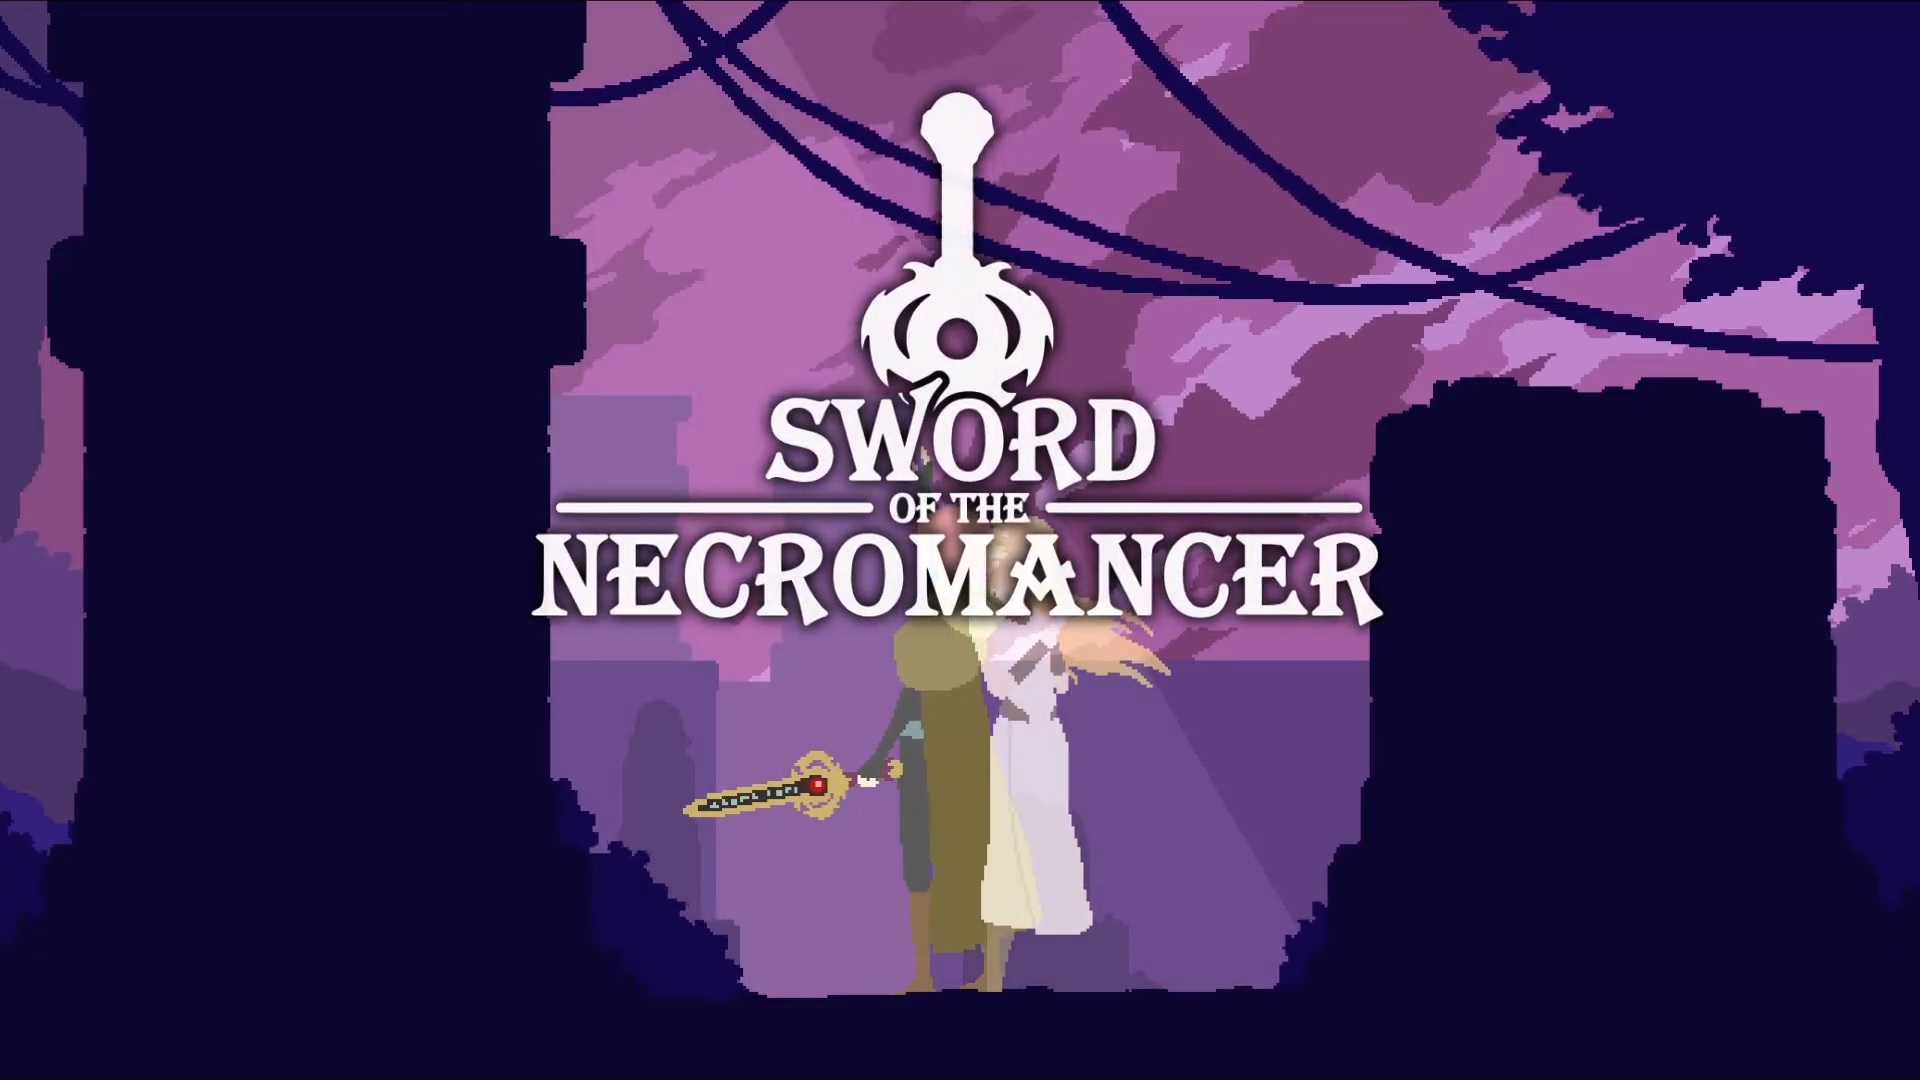 the sword of the necromancer